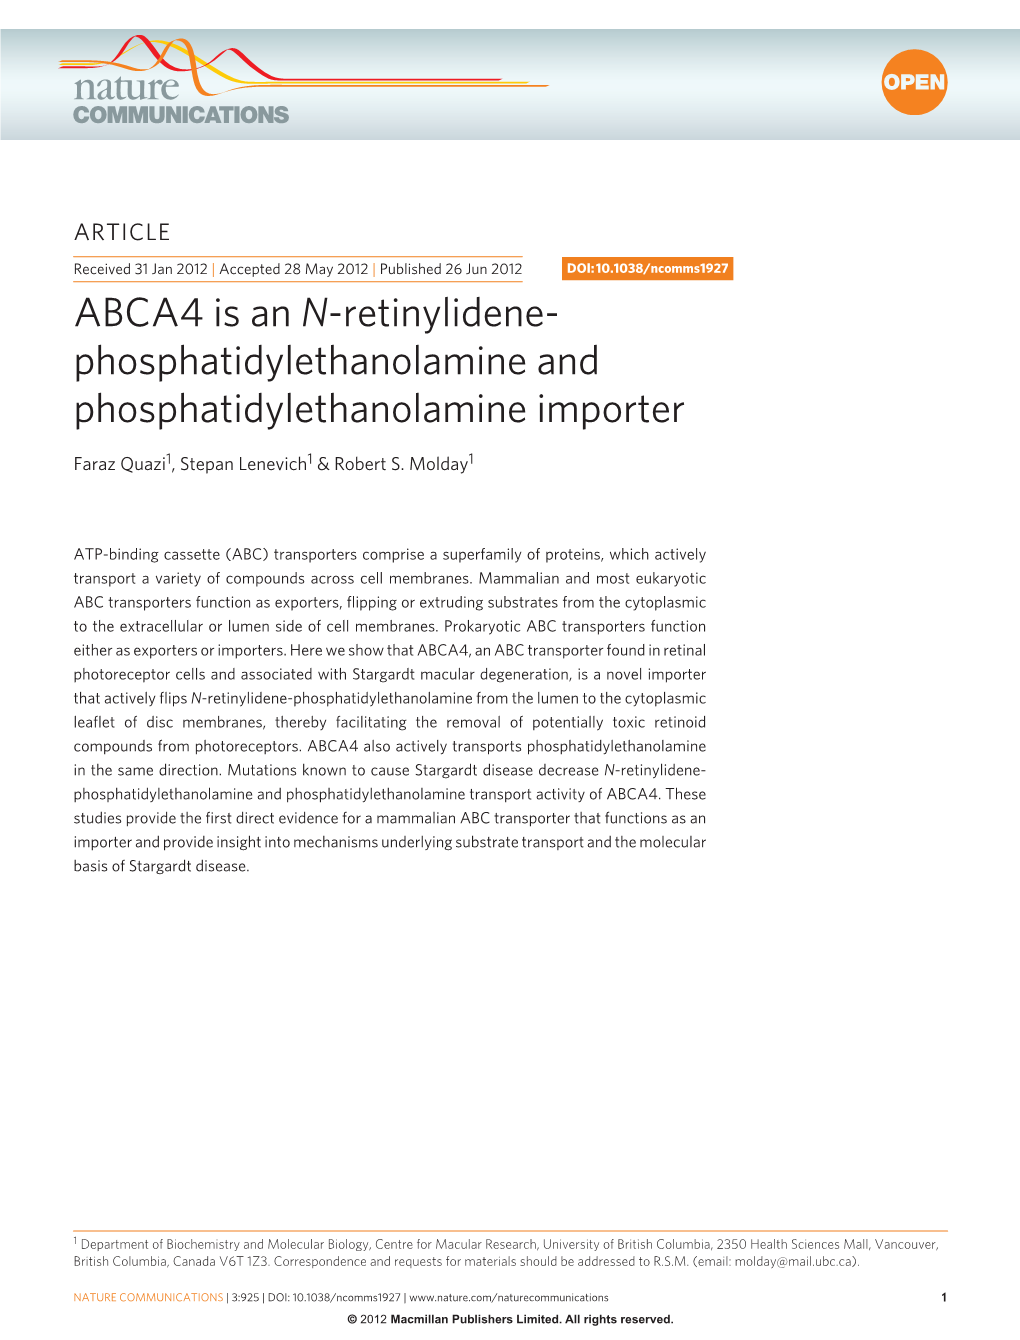 ABCA4 Is an N-Retinylidene- Phosphatidylethanolamine and Phosphatidylethanolamine Importer